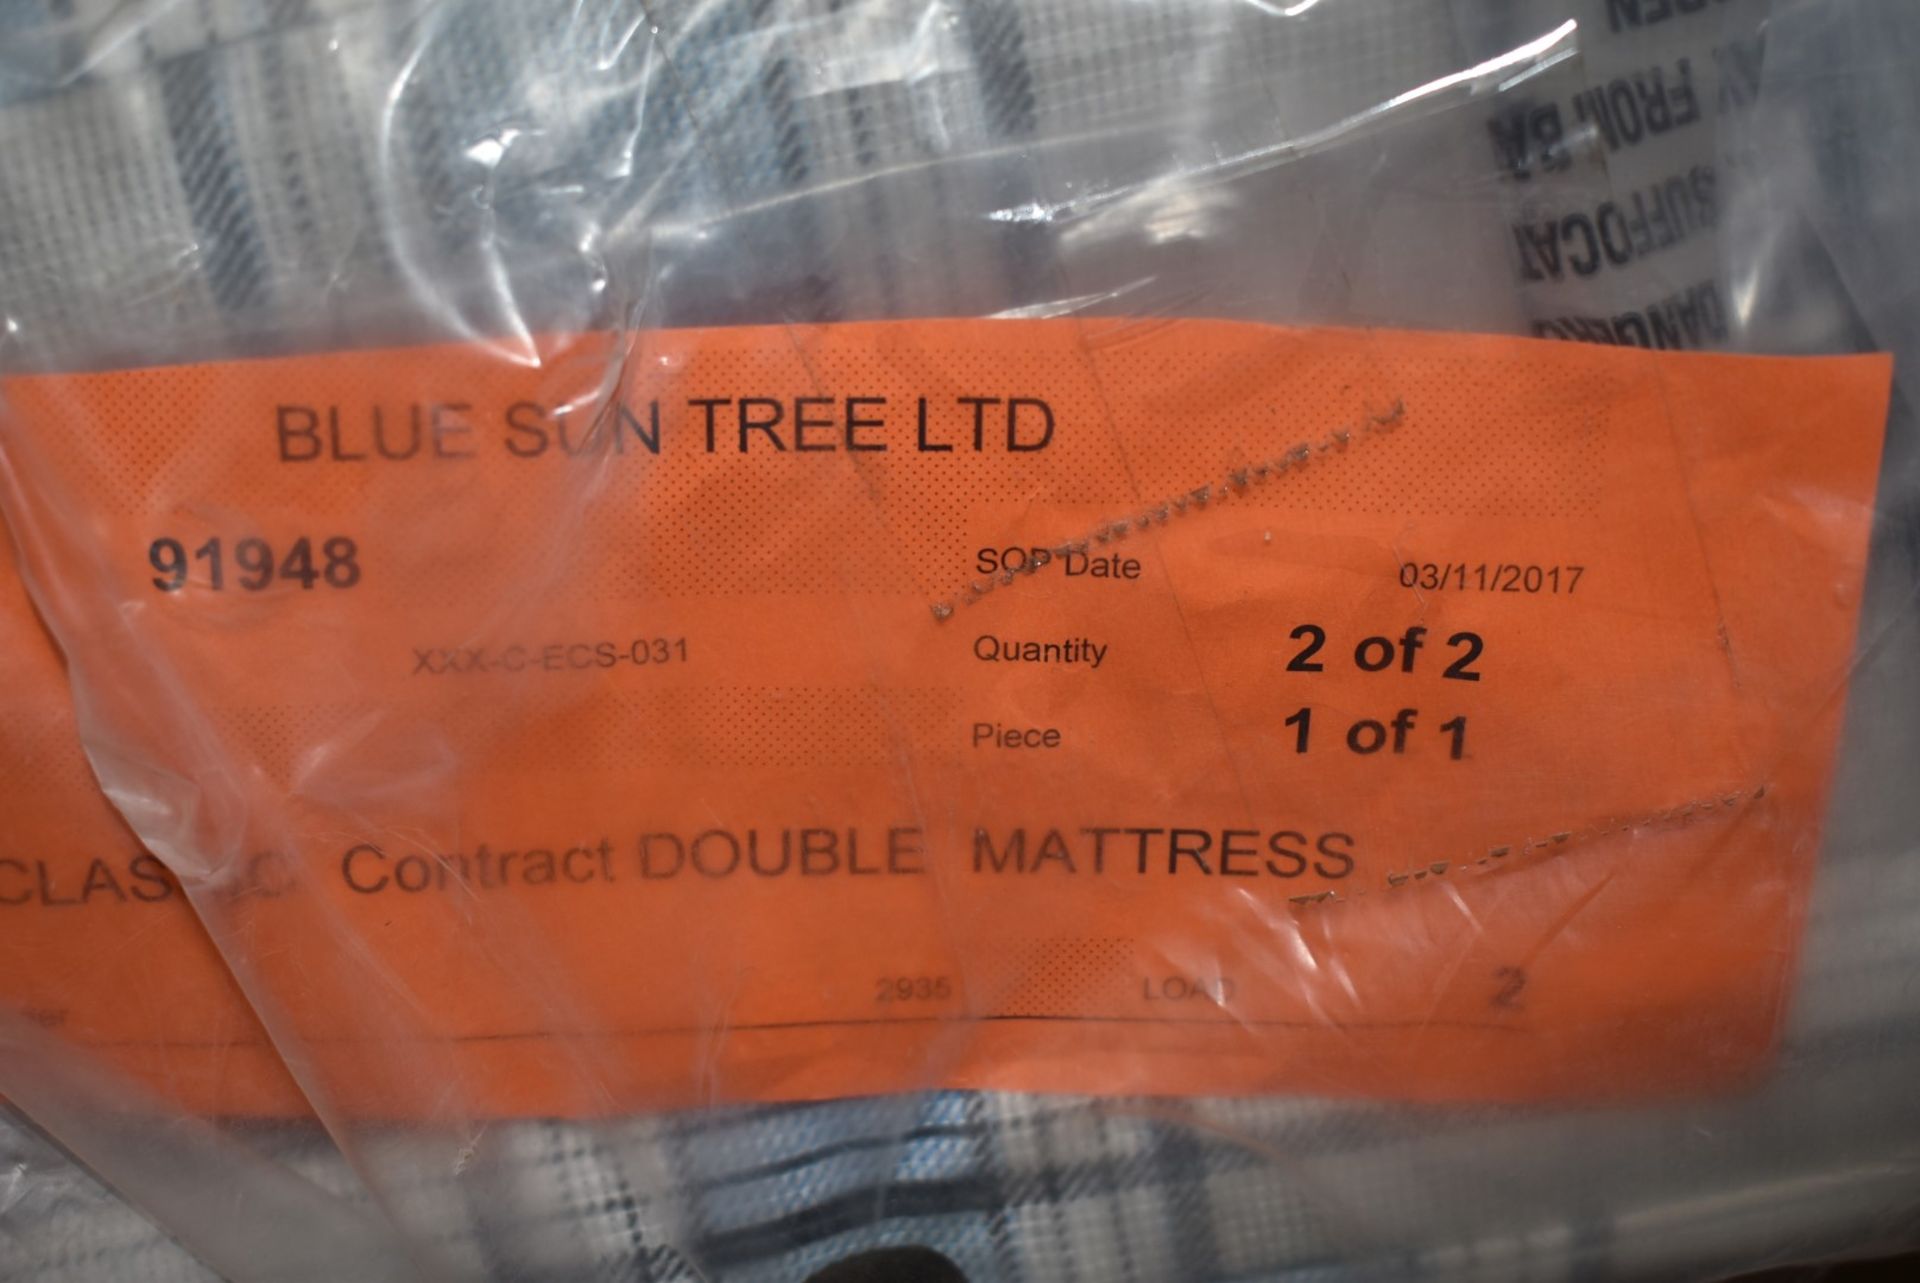 1 x Blue Suntree Double Mattress - New in Original Packaging - Ref: JP934 GITW - CL011 - Location: - Image 2 of 4